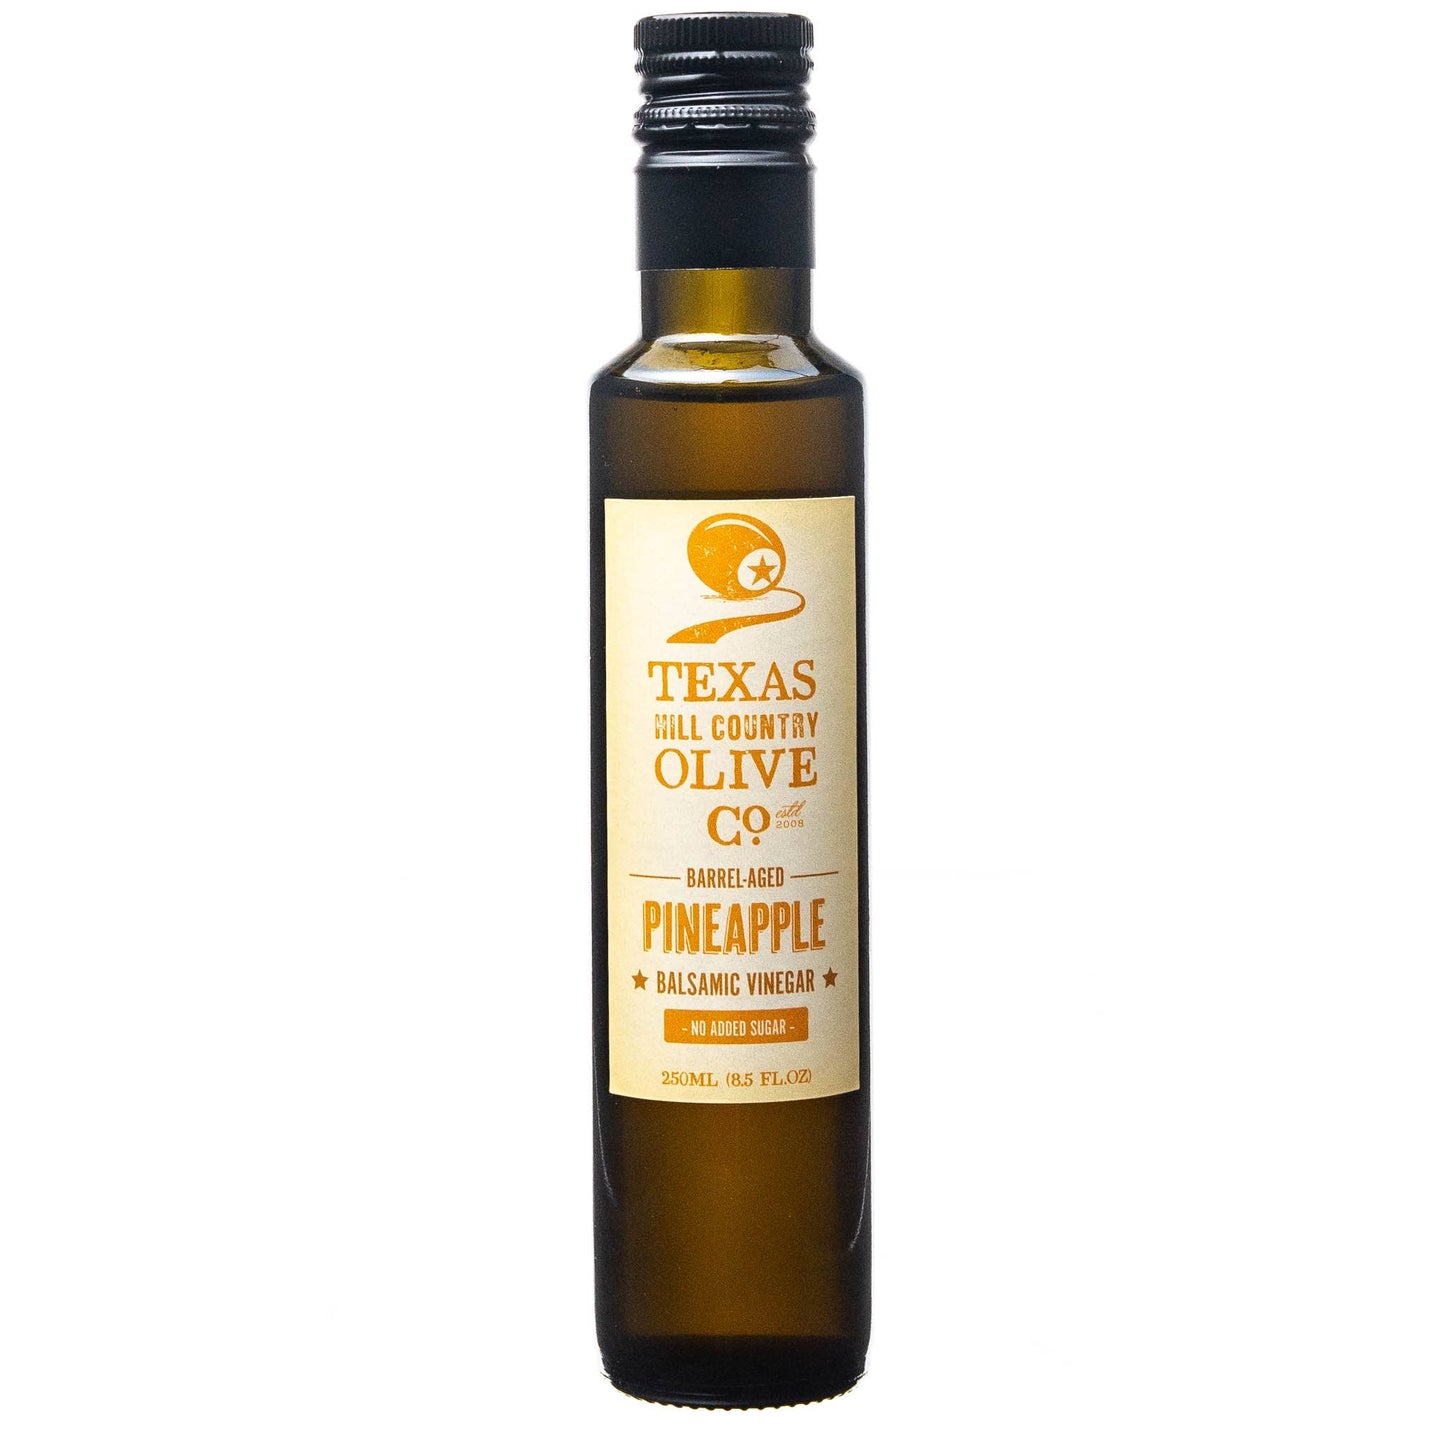 Texas Hill Country Olive Co. - Pineapple Balsamic Vinegar - 250ml